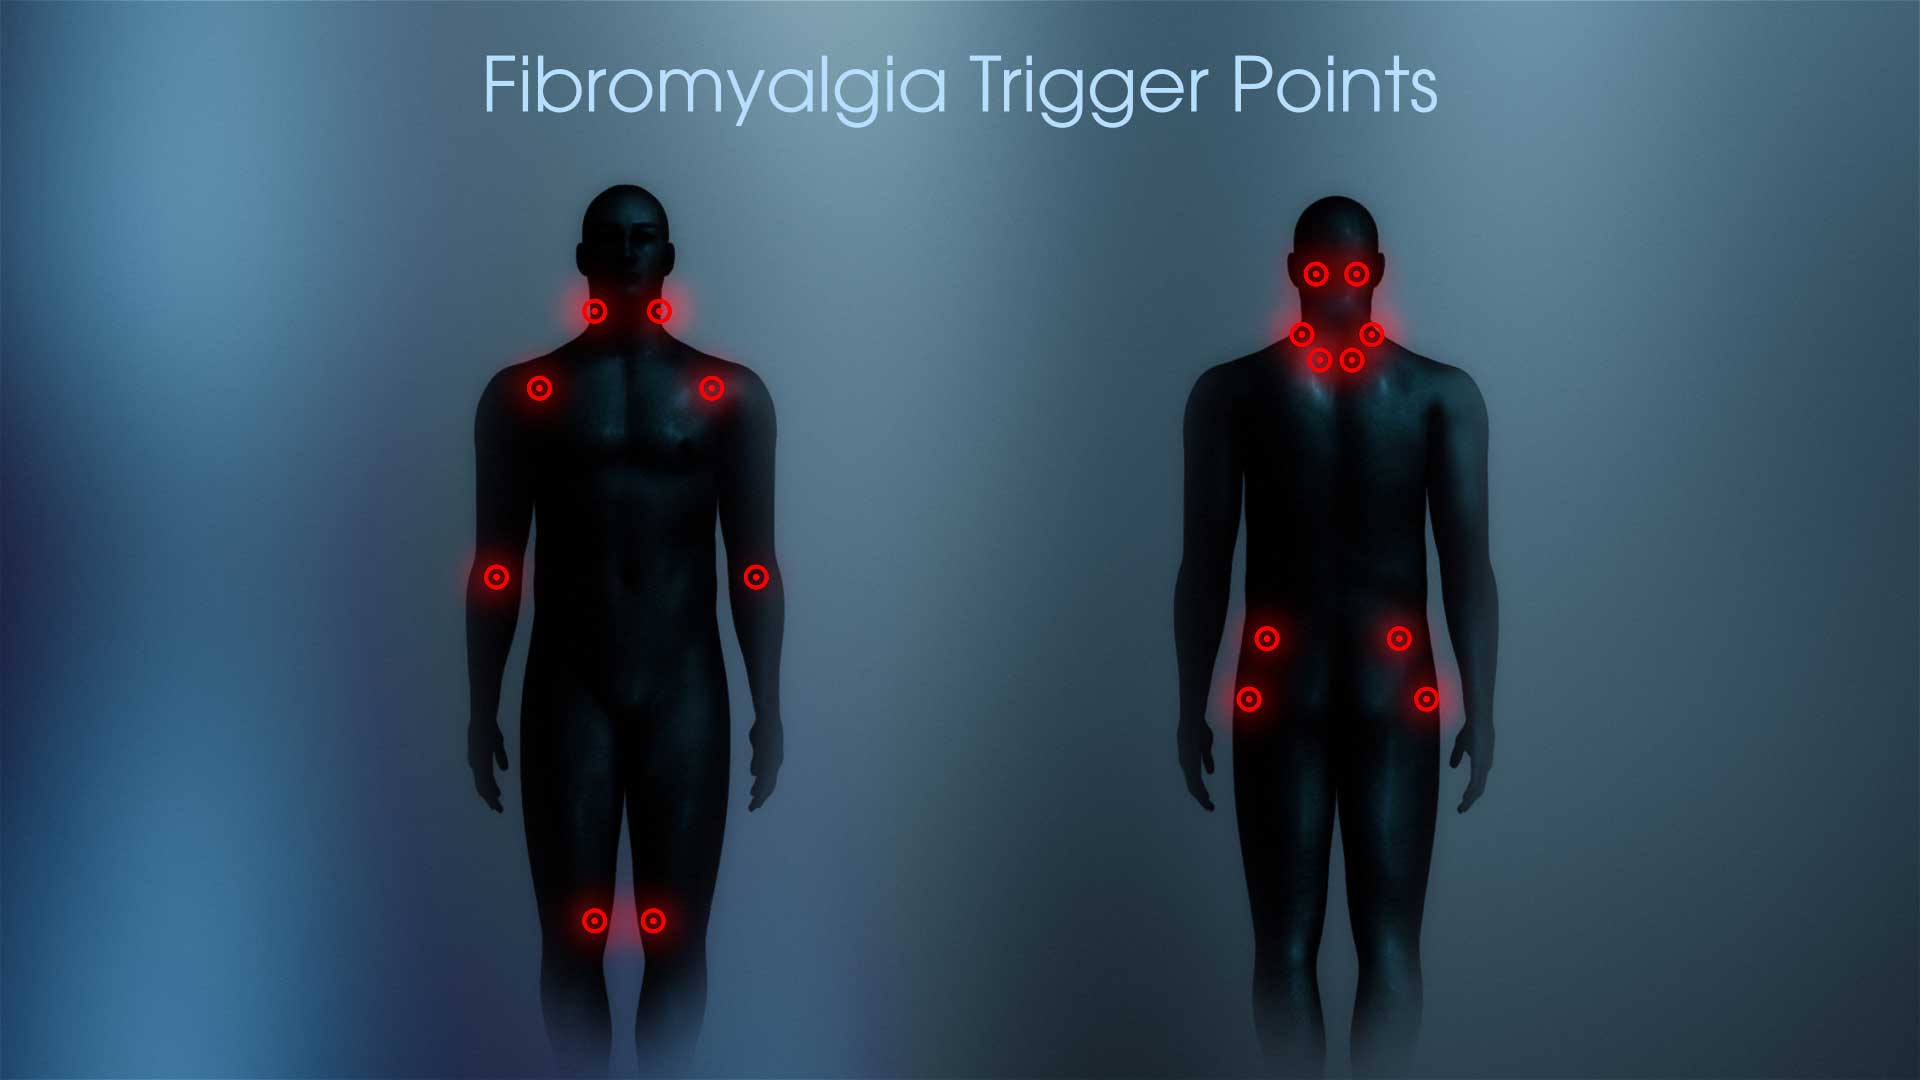 Fibromyalgia: Causes, Symptoms, and Treatment Options